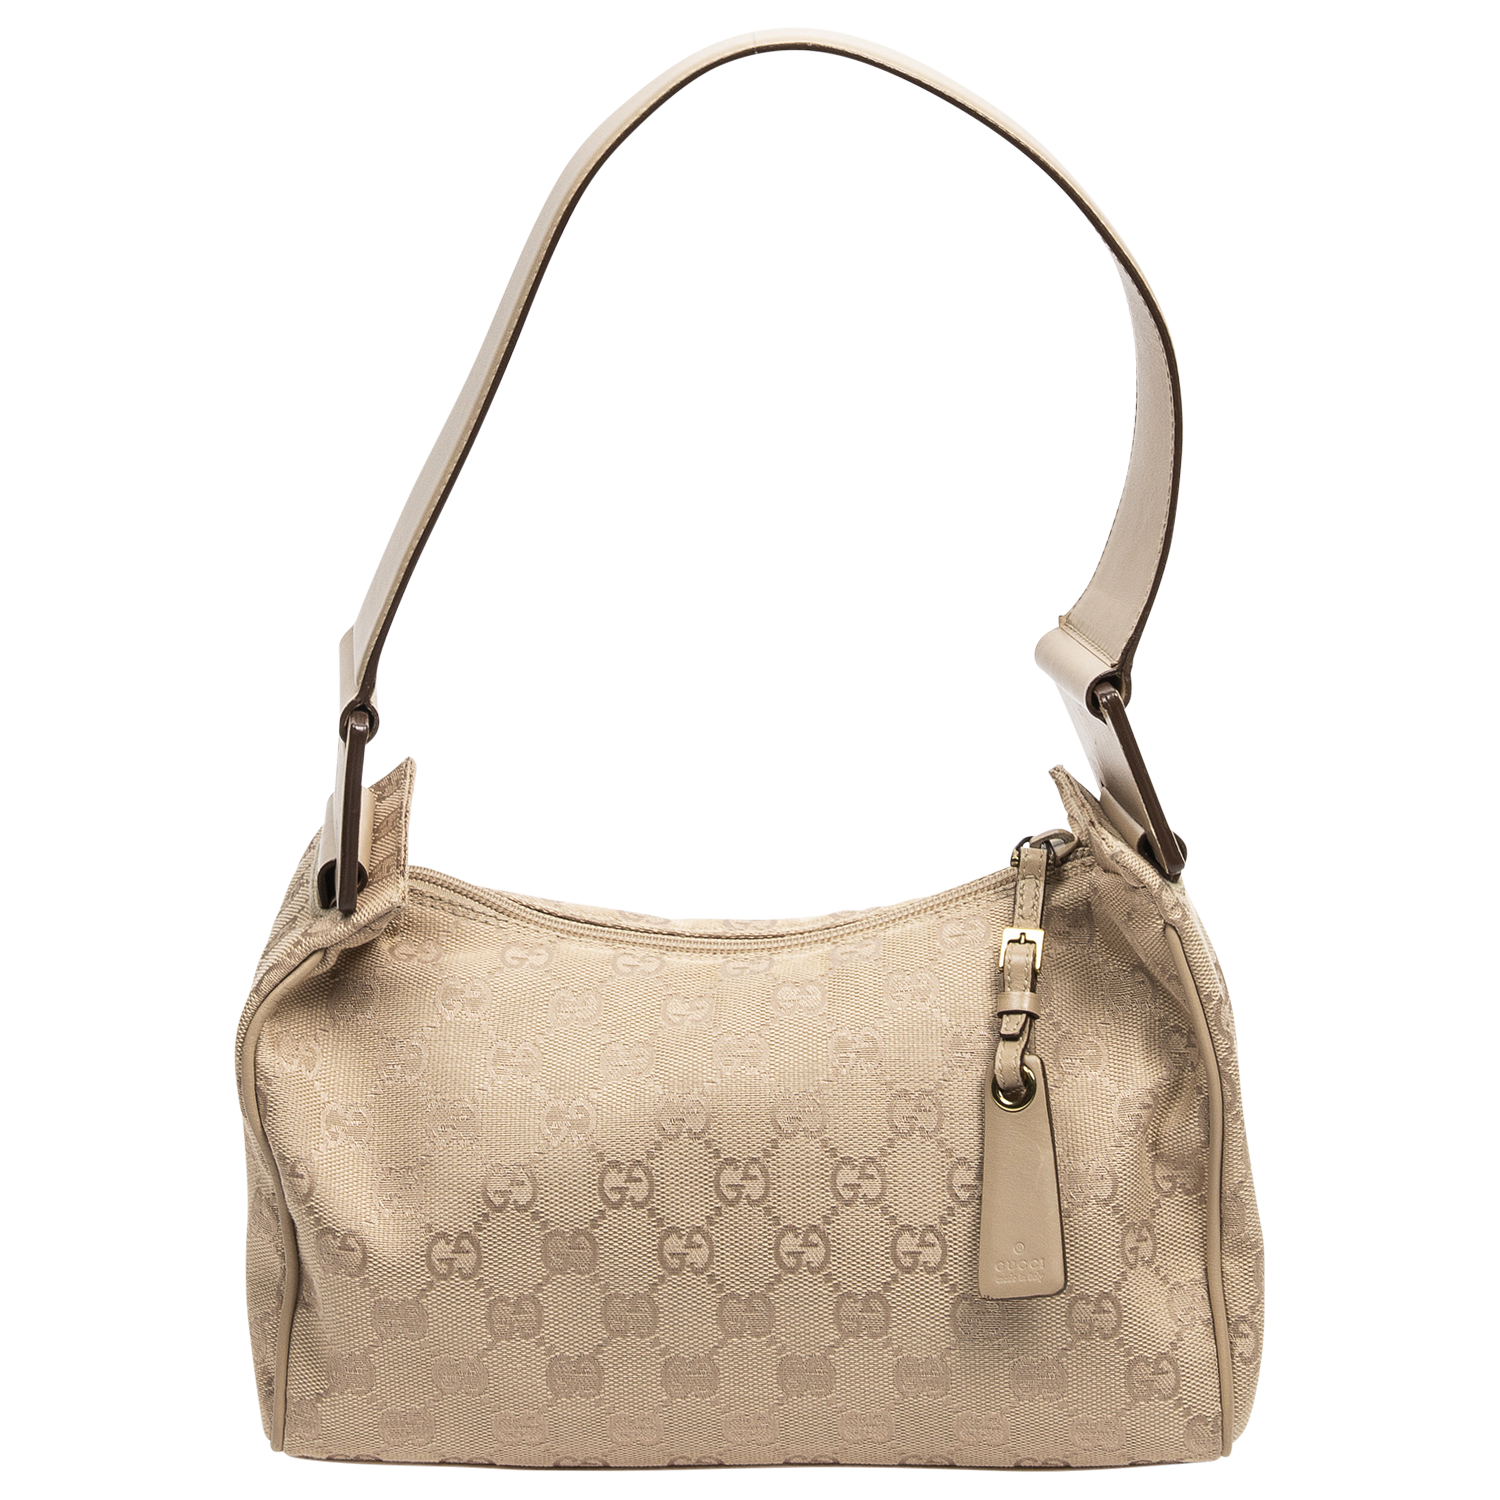 Gucci by Tom Ford Rare Beige GG Shoulder Bag